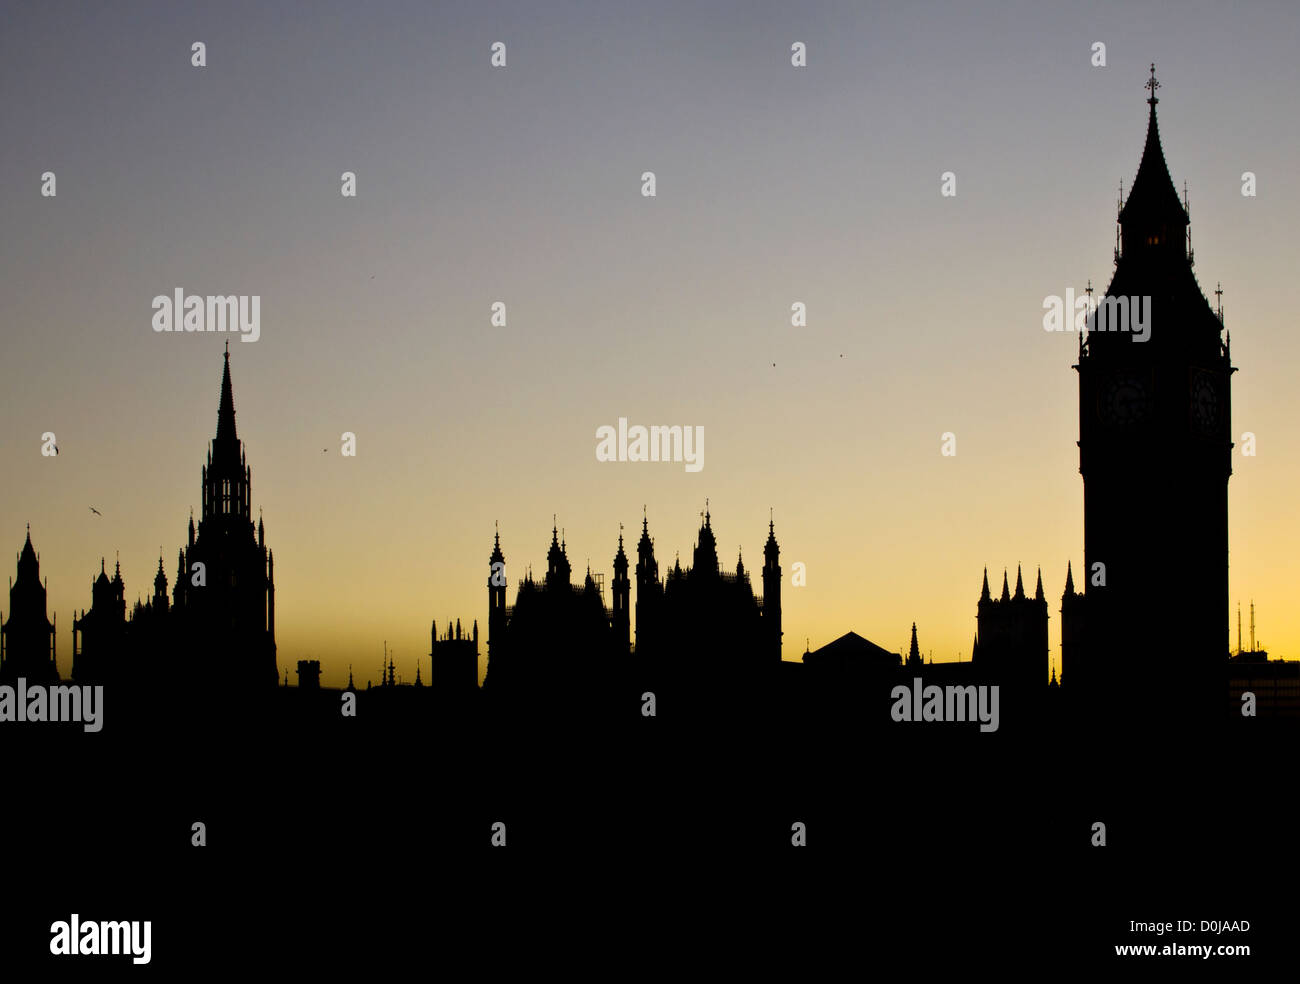 Sonnenuntergang hinter dem berühmten Big Ben und das Houses of Parliament Building. Stockfoto